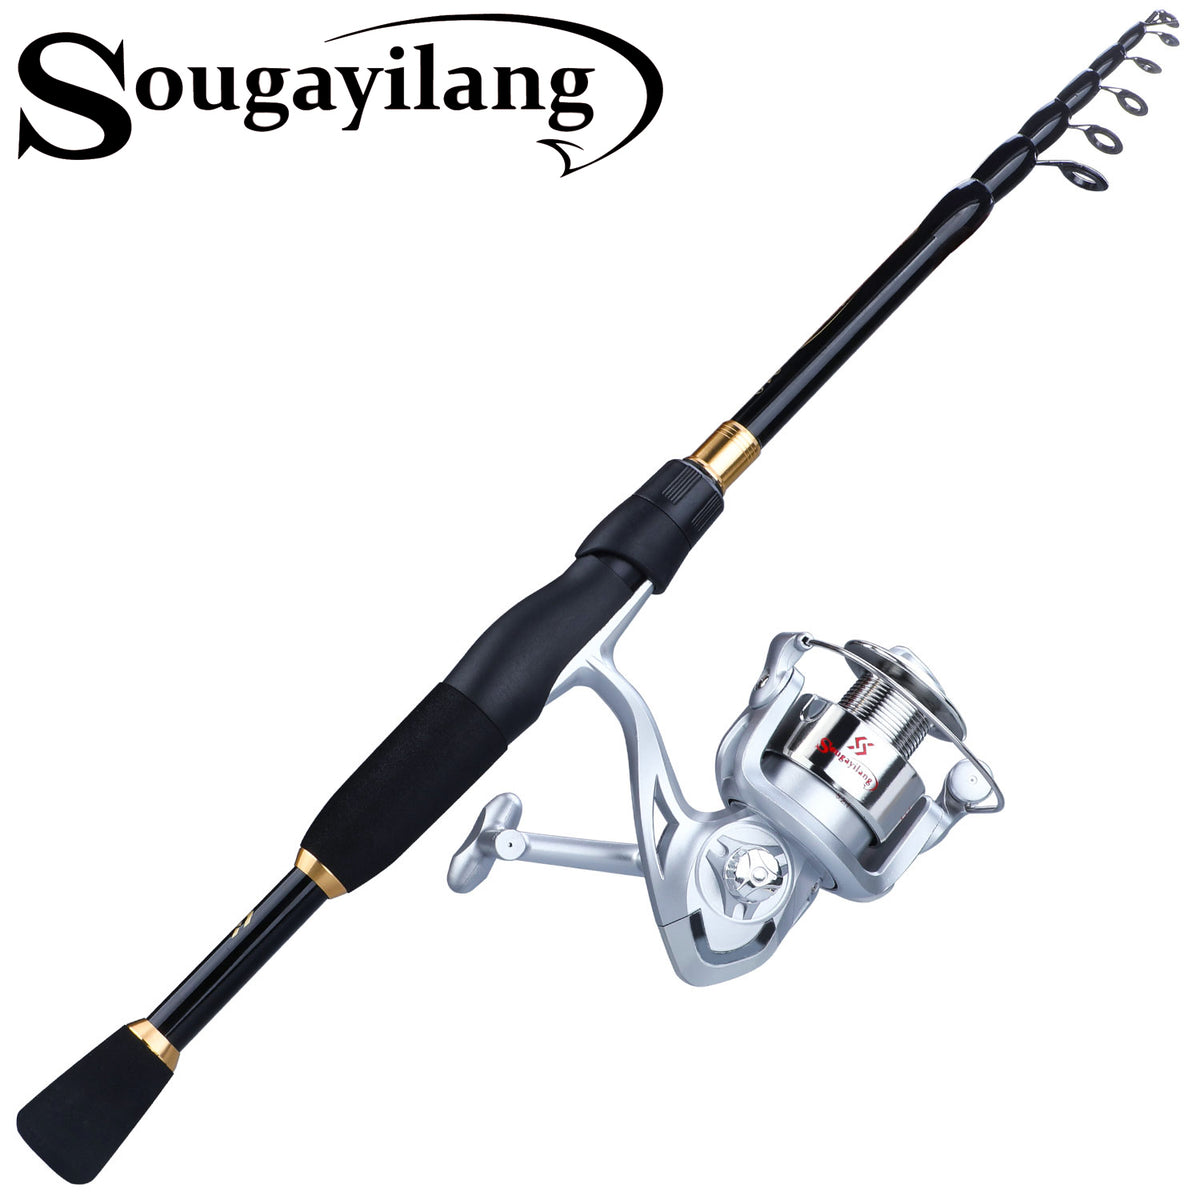 Sougayilang Portable Telescopic Fishing Rod and Reel Combos Travel